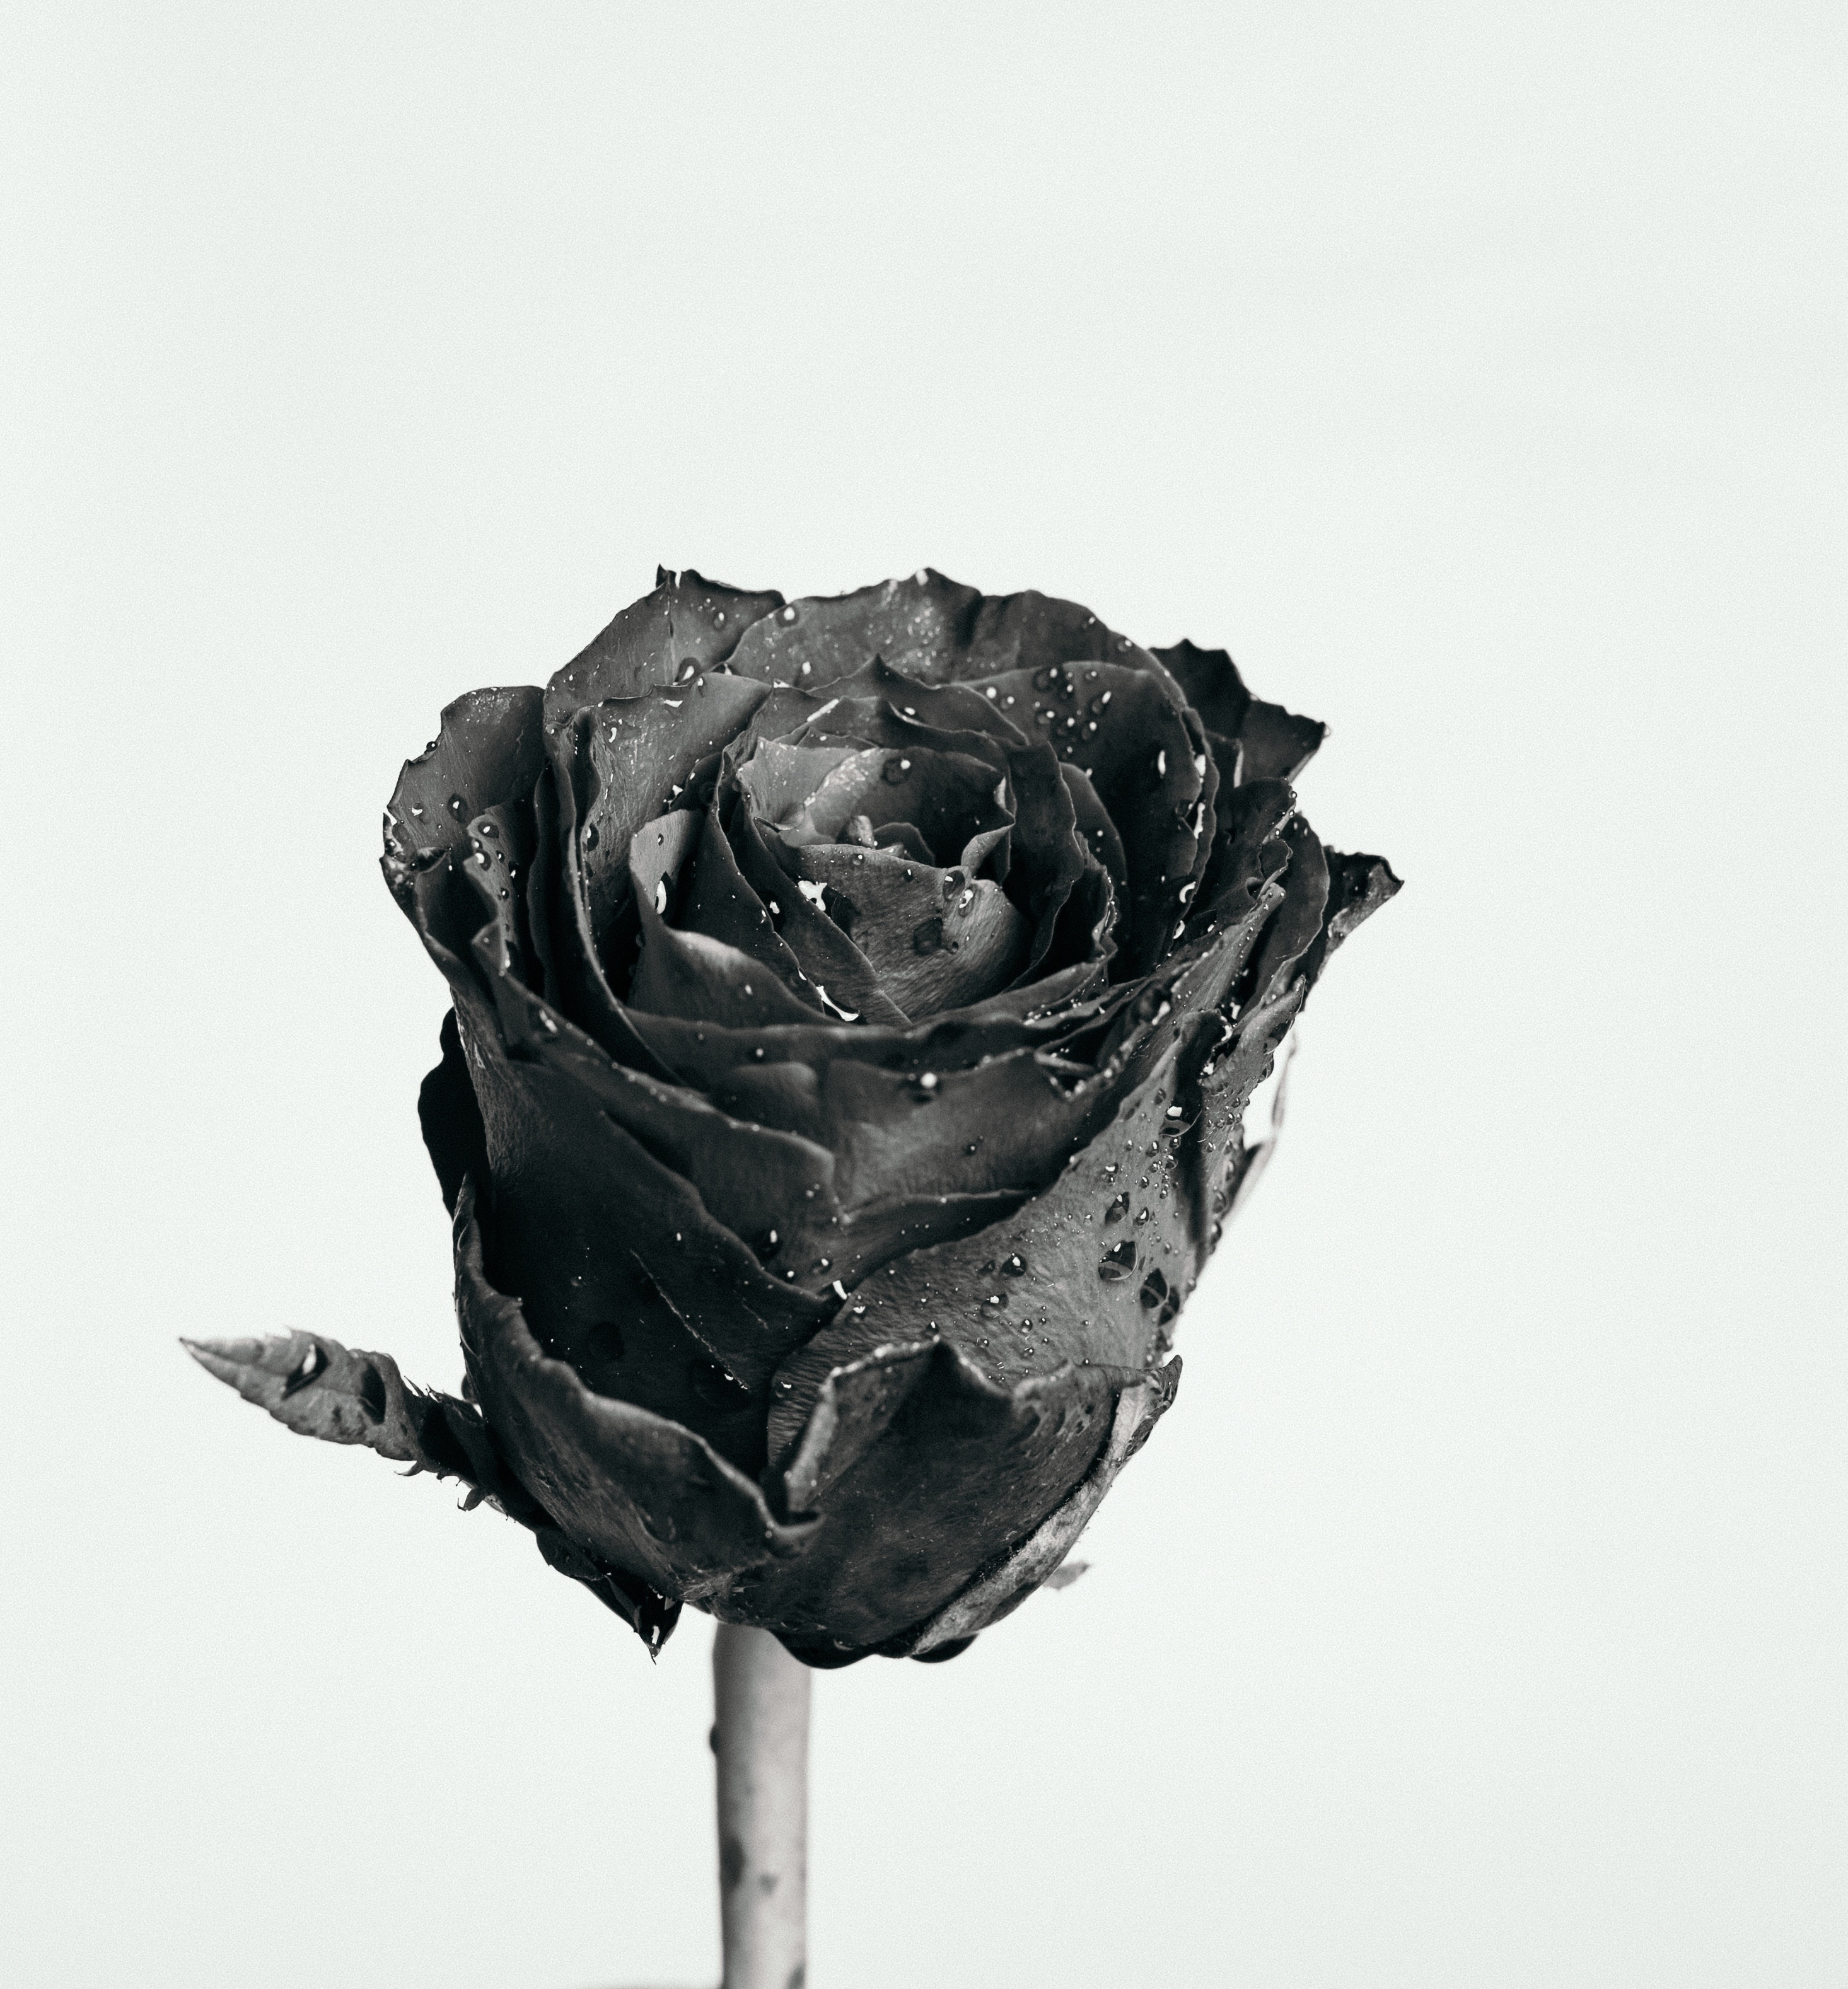 Best Black Rose Photo · 100% Free Downloads